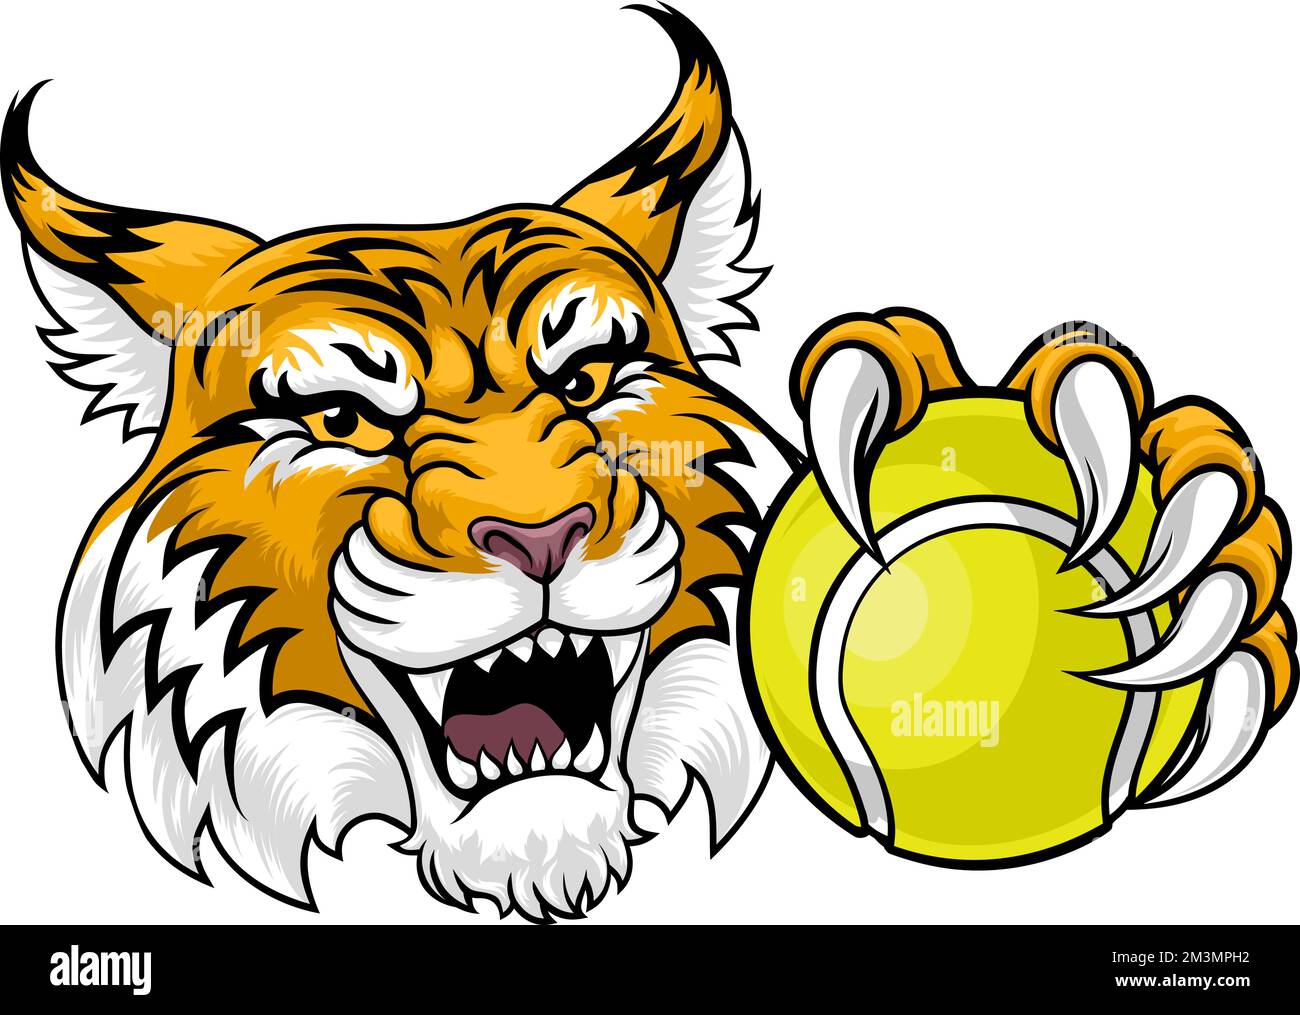 Wildcat Bobcat Tennis Ball Animal Team Mascot Stock Vector